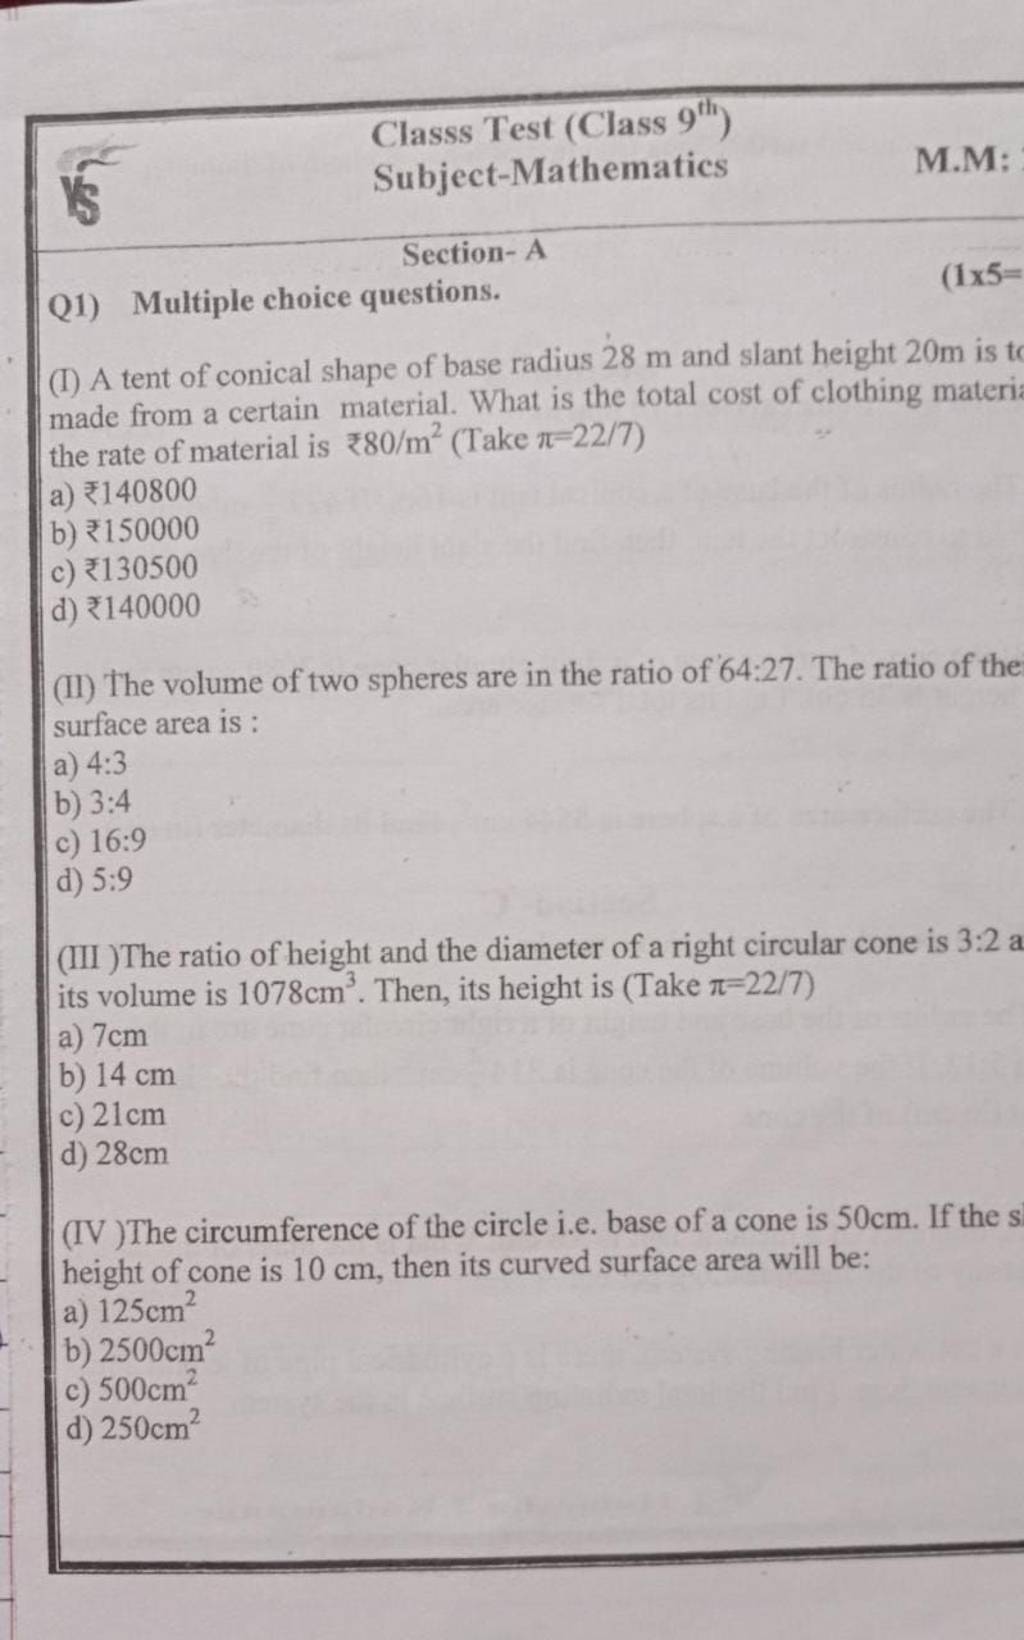 Classs Test (Class 9th  )
Subject-Mathematics
M.M:
Q1) Multiple choice